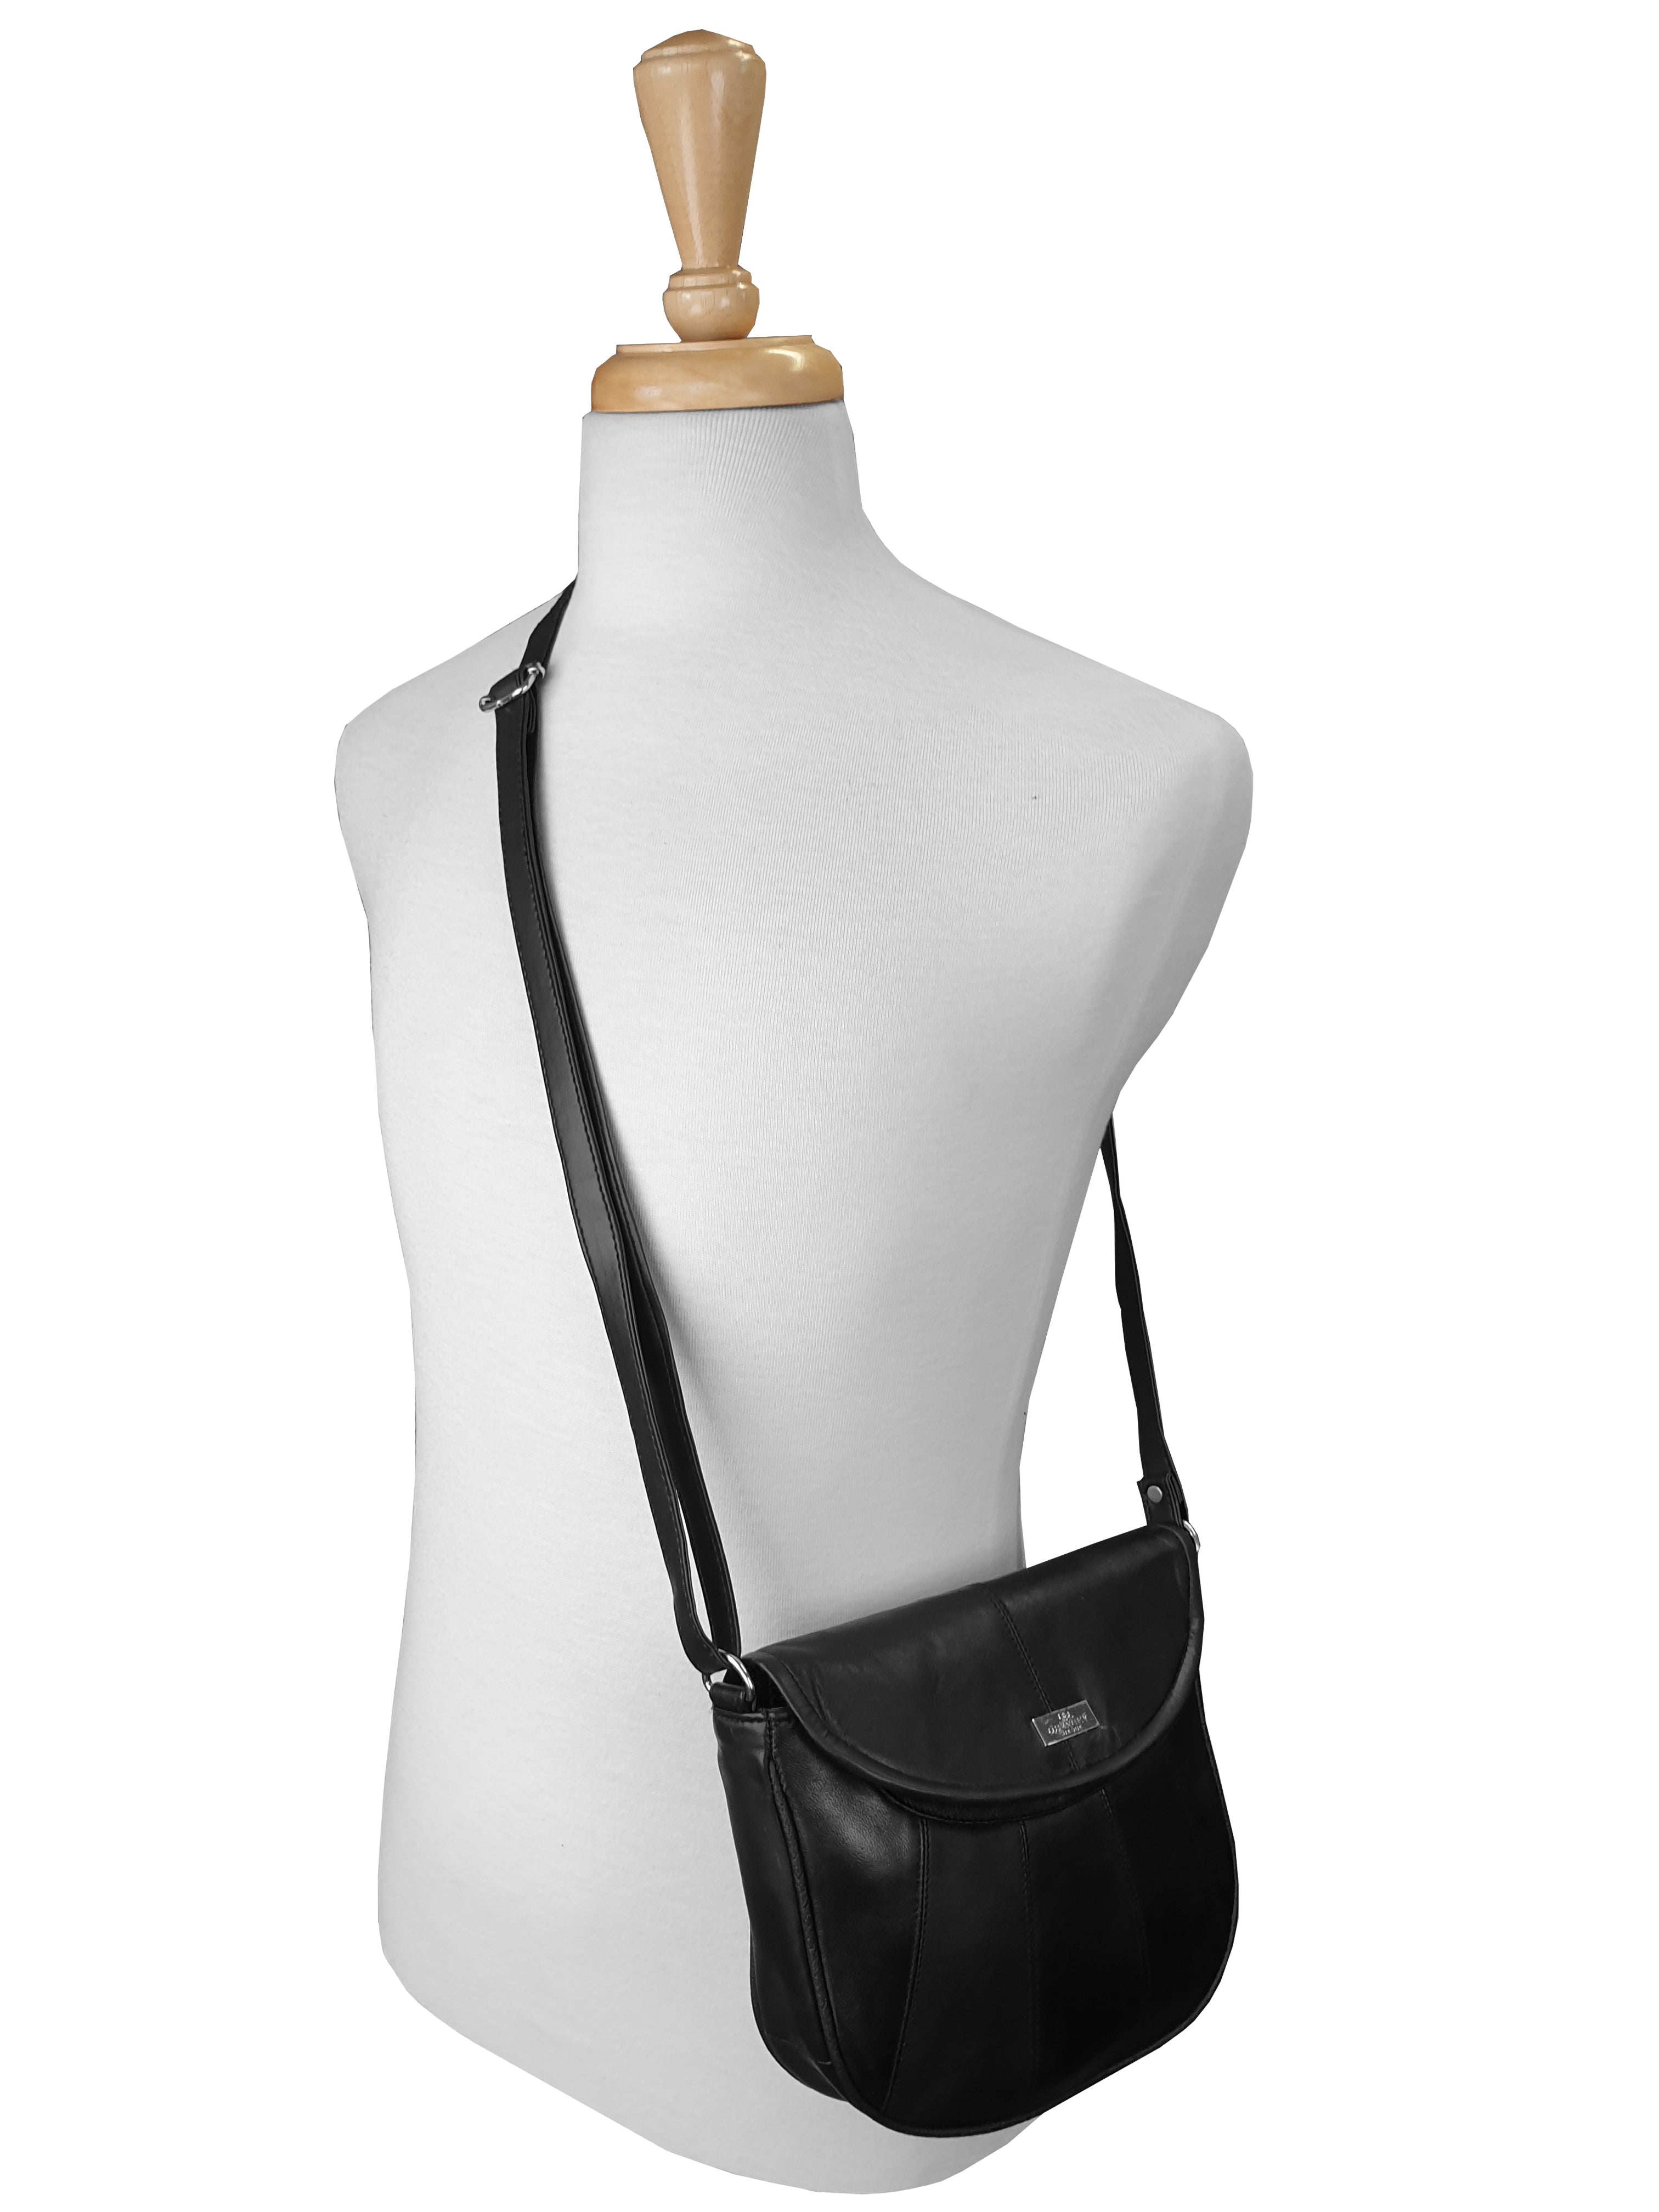 Women's Shoulder Bags, Designer Cross Body Bags